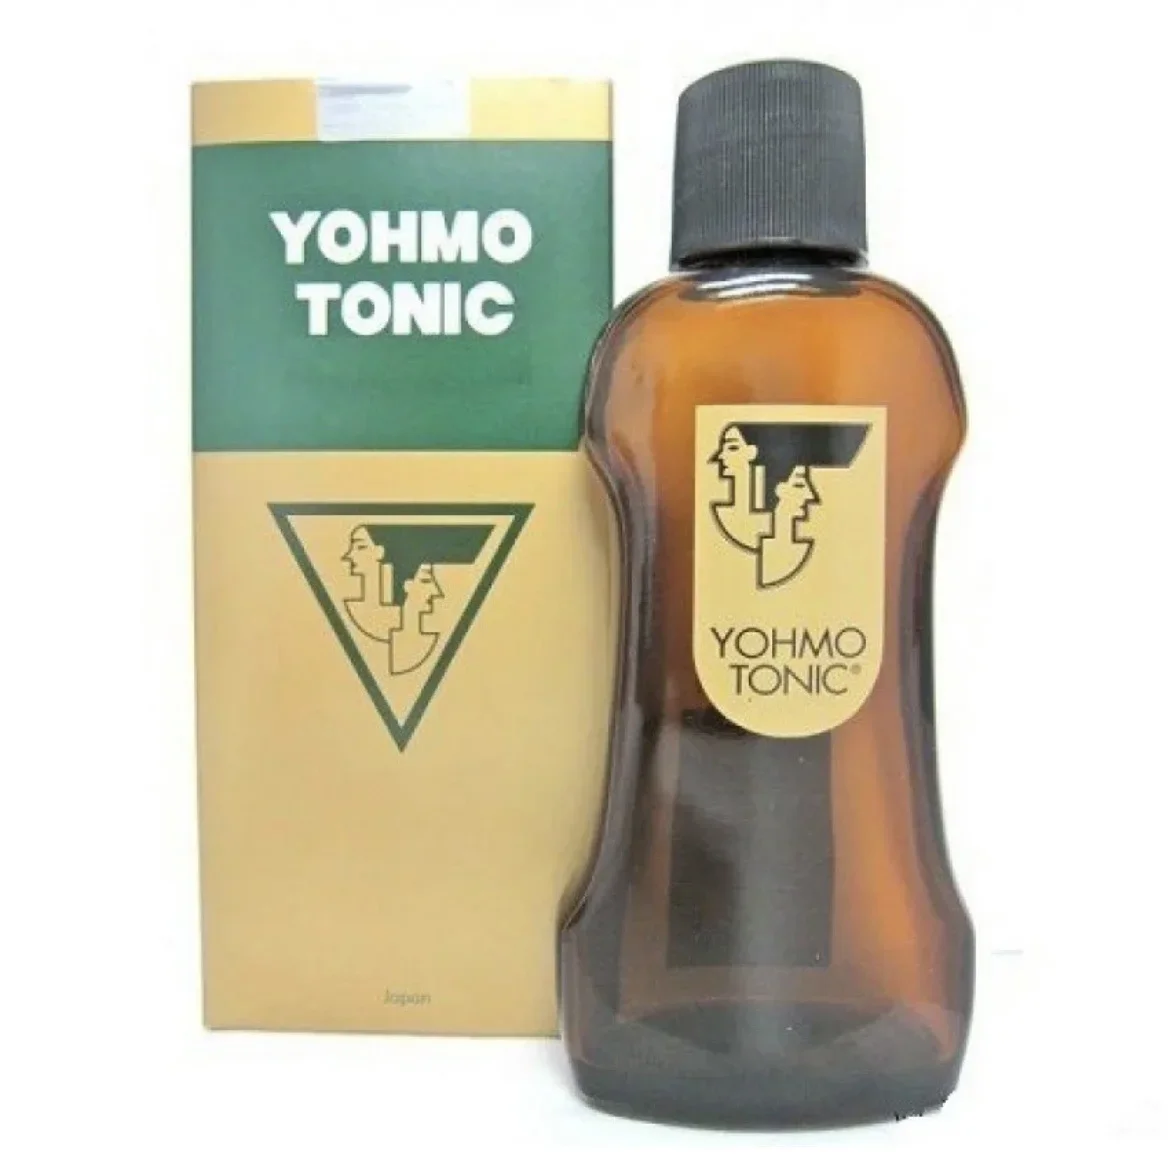 Yohmo Hair Tonic from Japan 200ml